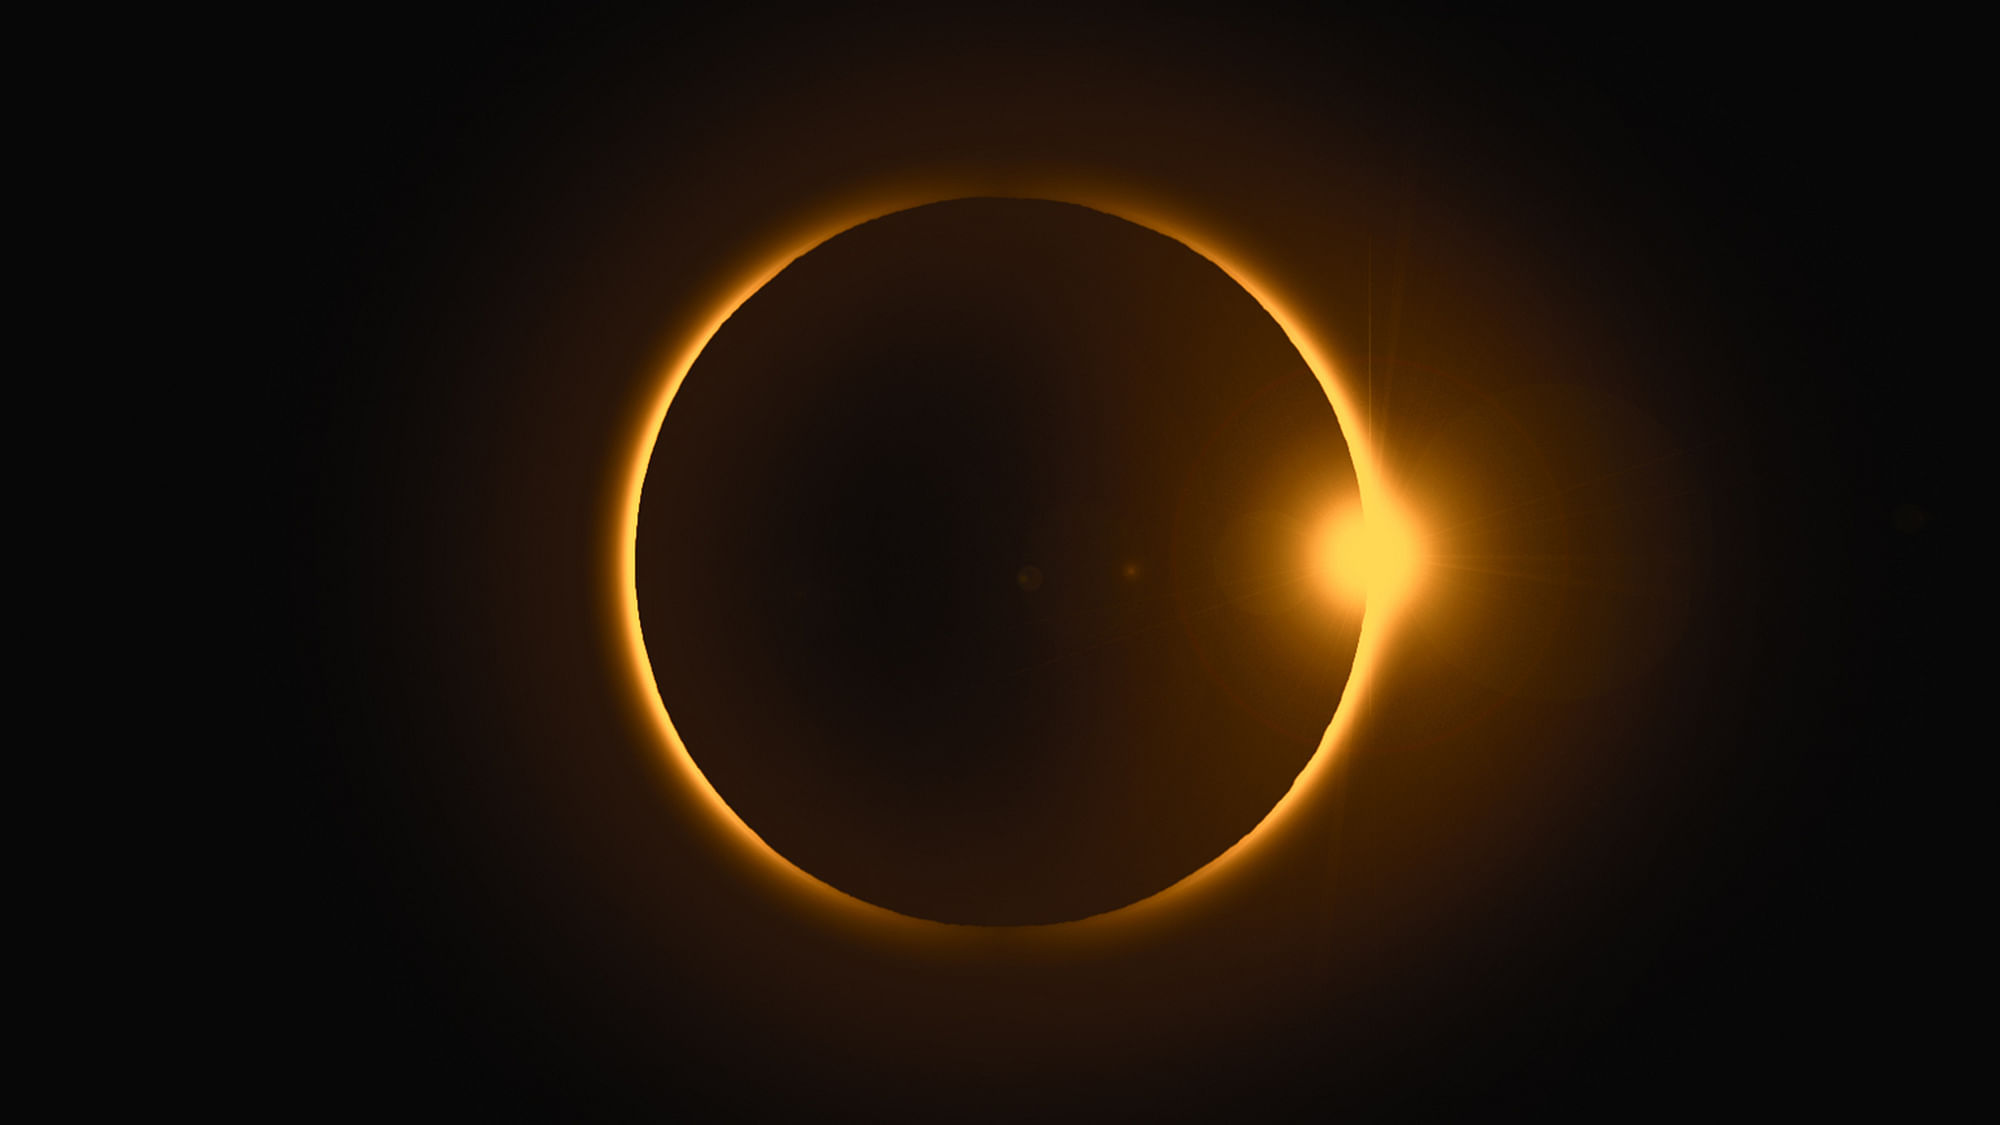 Solar eclipse 10 june 2021